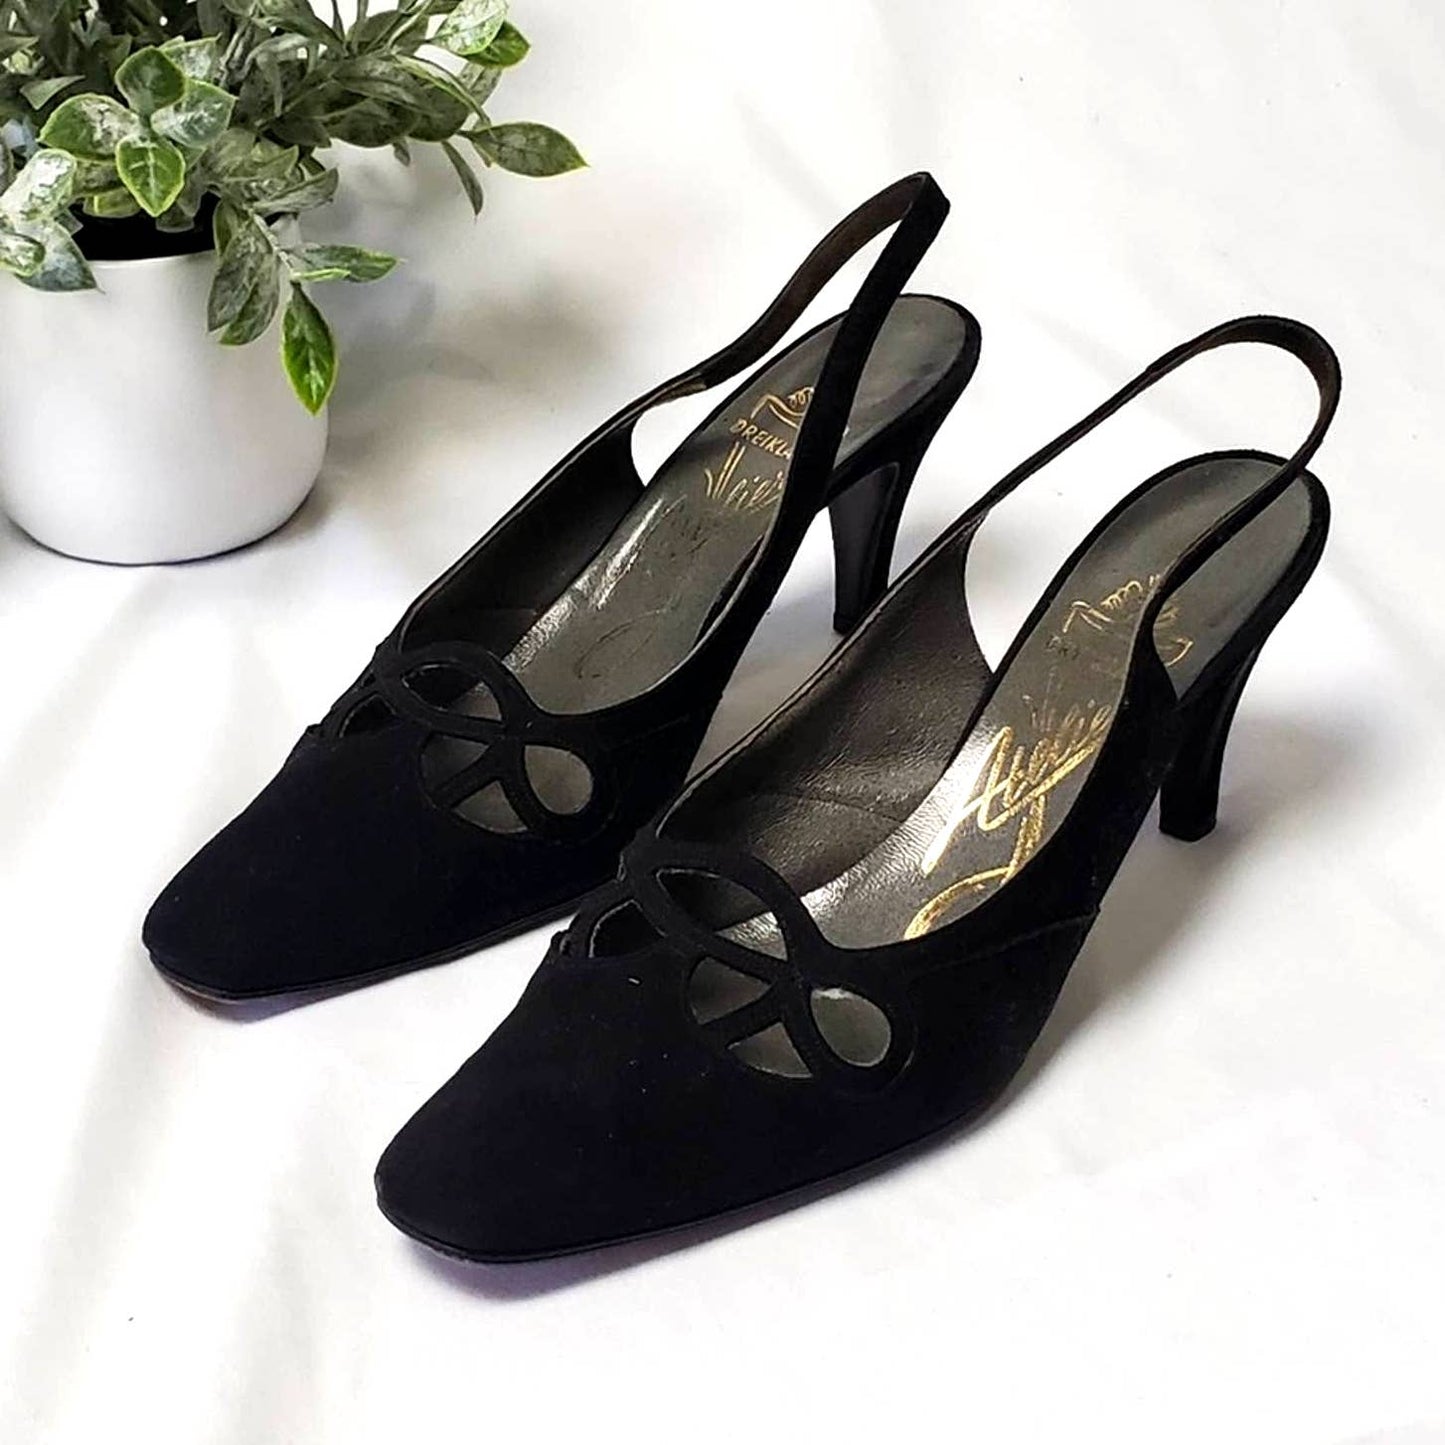 Vintage 1950's Atelier Black Sling Back Heels - 4 1/2